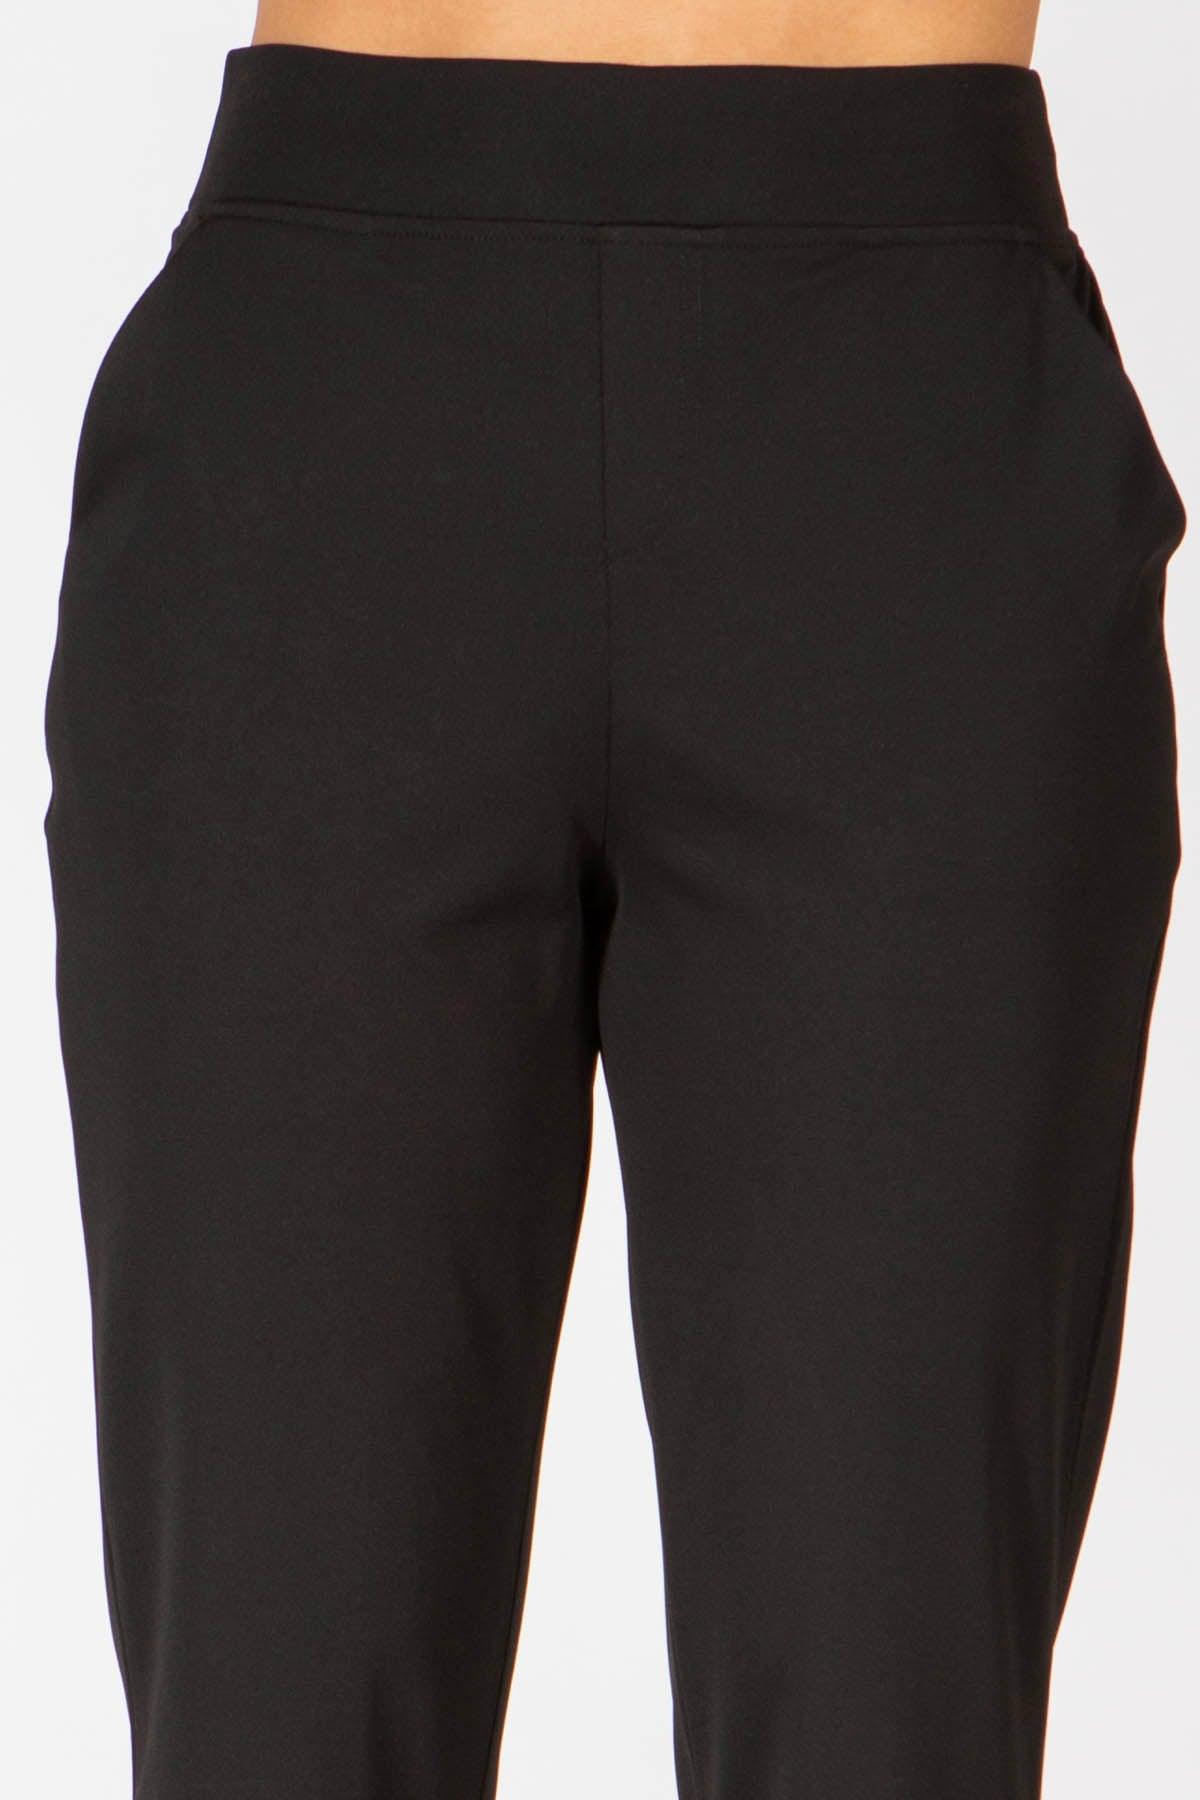 High Waist Lightweight Ponte Pull On Pants With Pockets - Black - SHOSHO Fashion